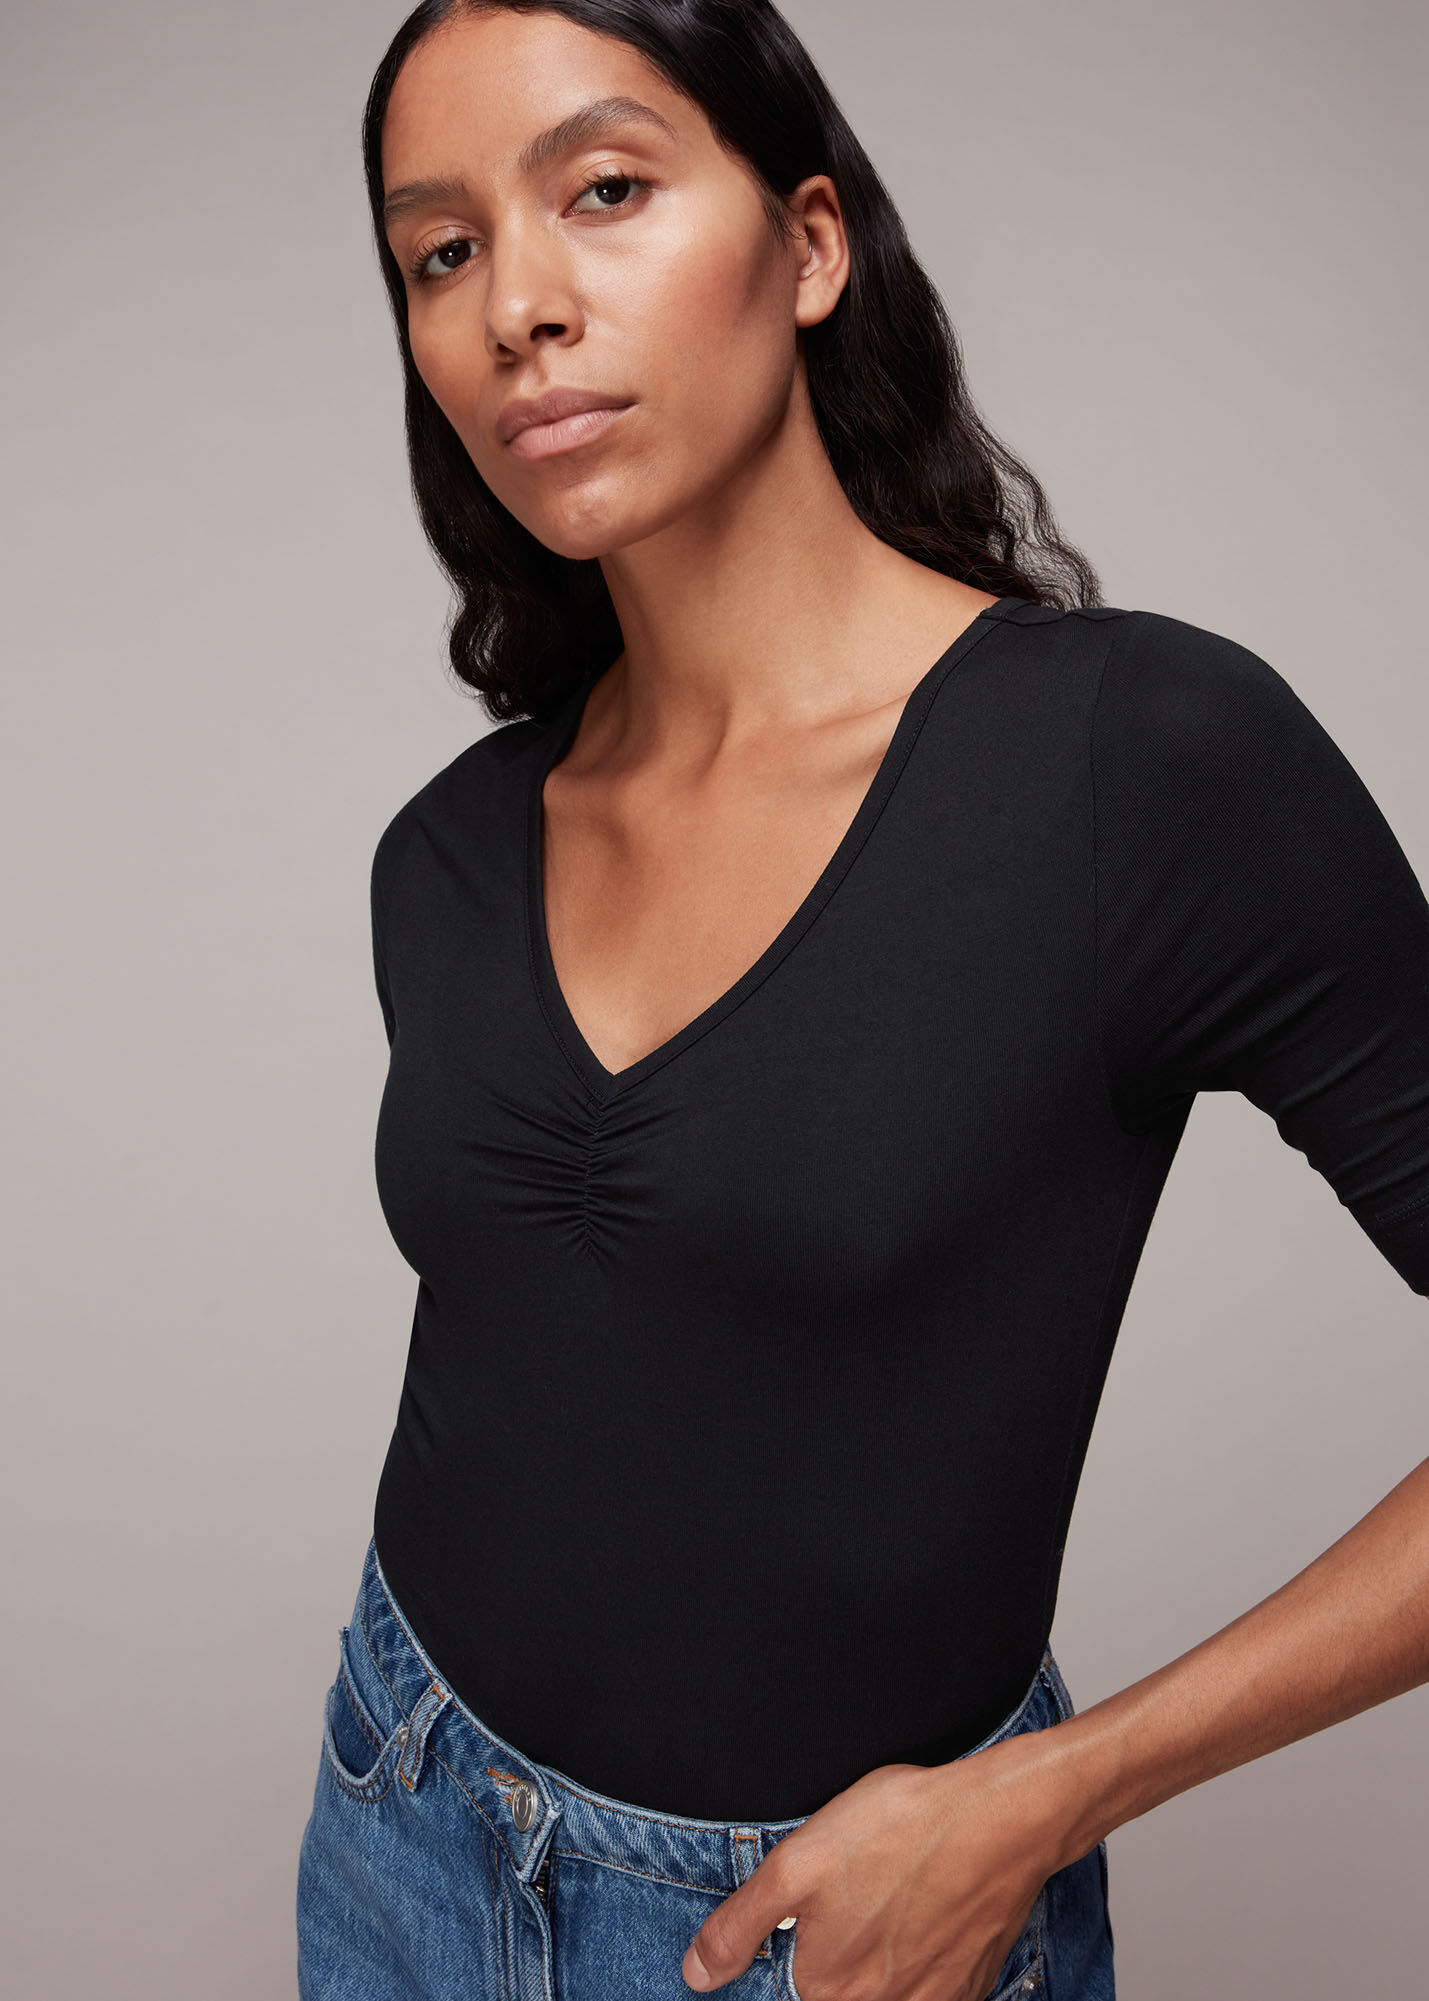 WOMEN FASHION Shirts & T-shirts Bodysuit Elegant H&M bodysuit Black XS discount 52% 